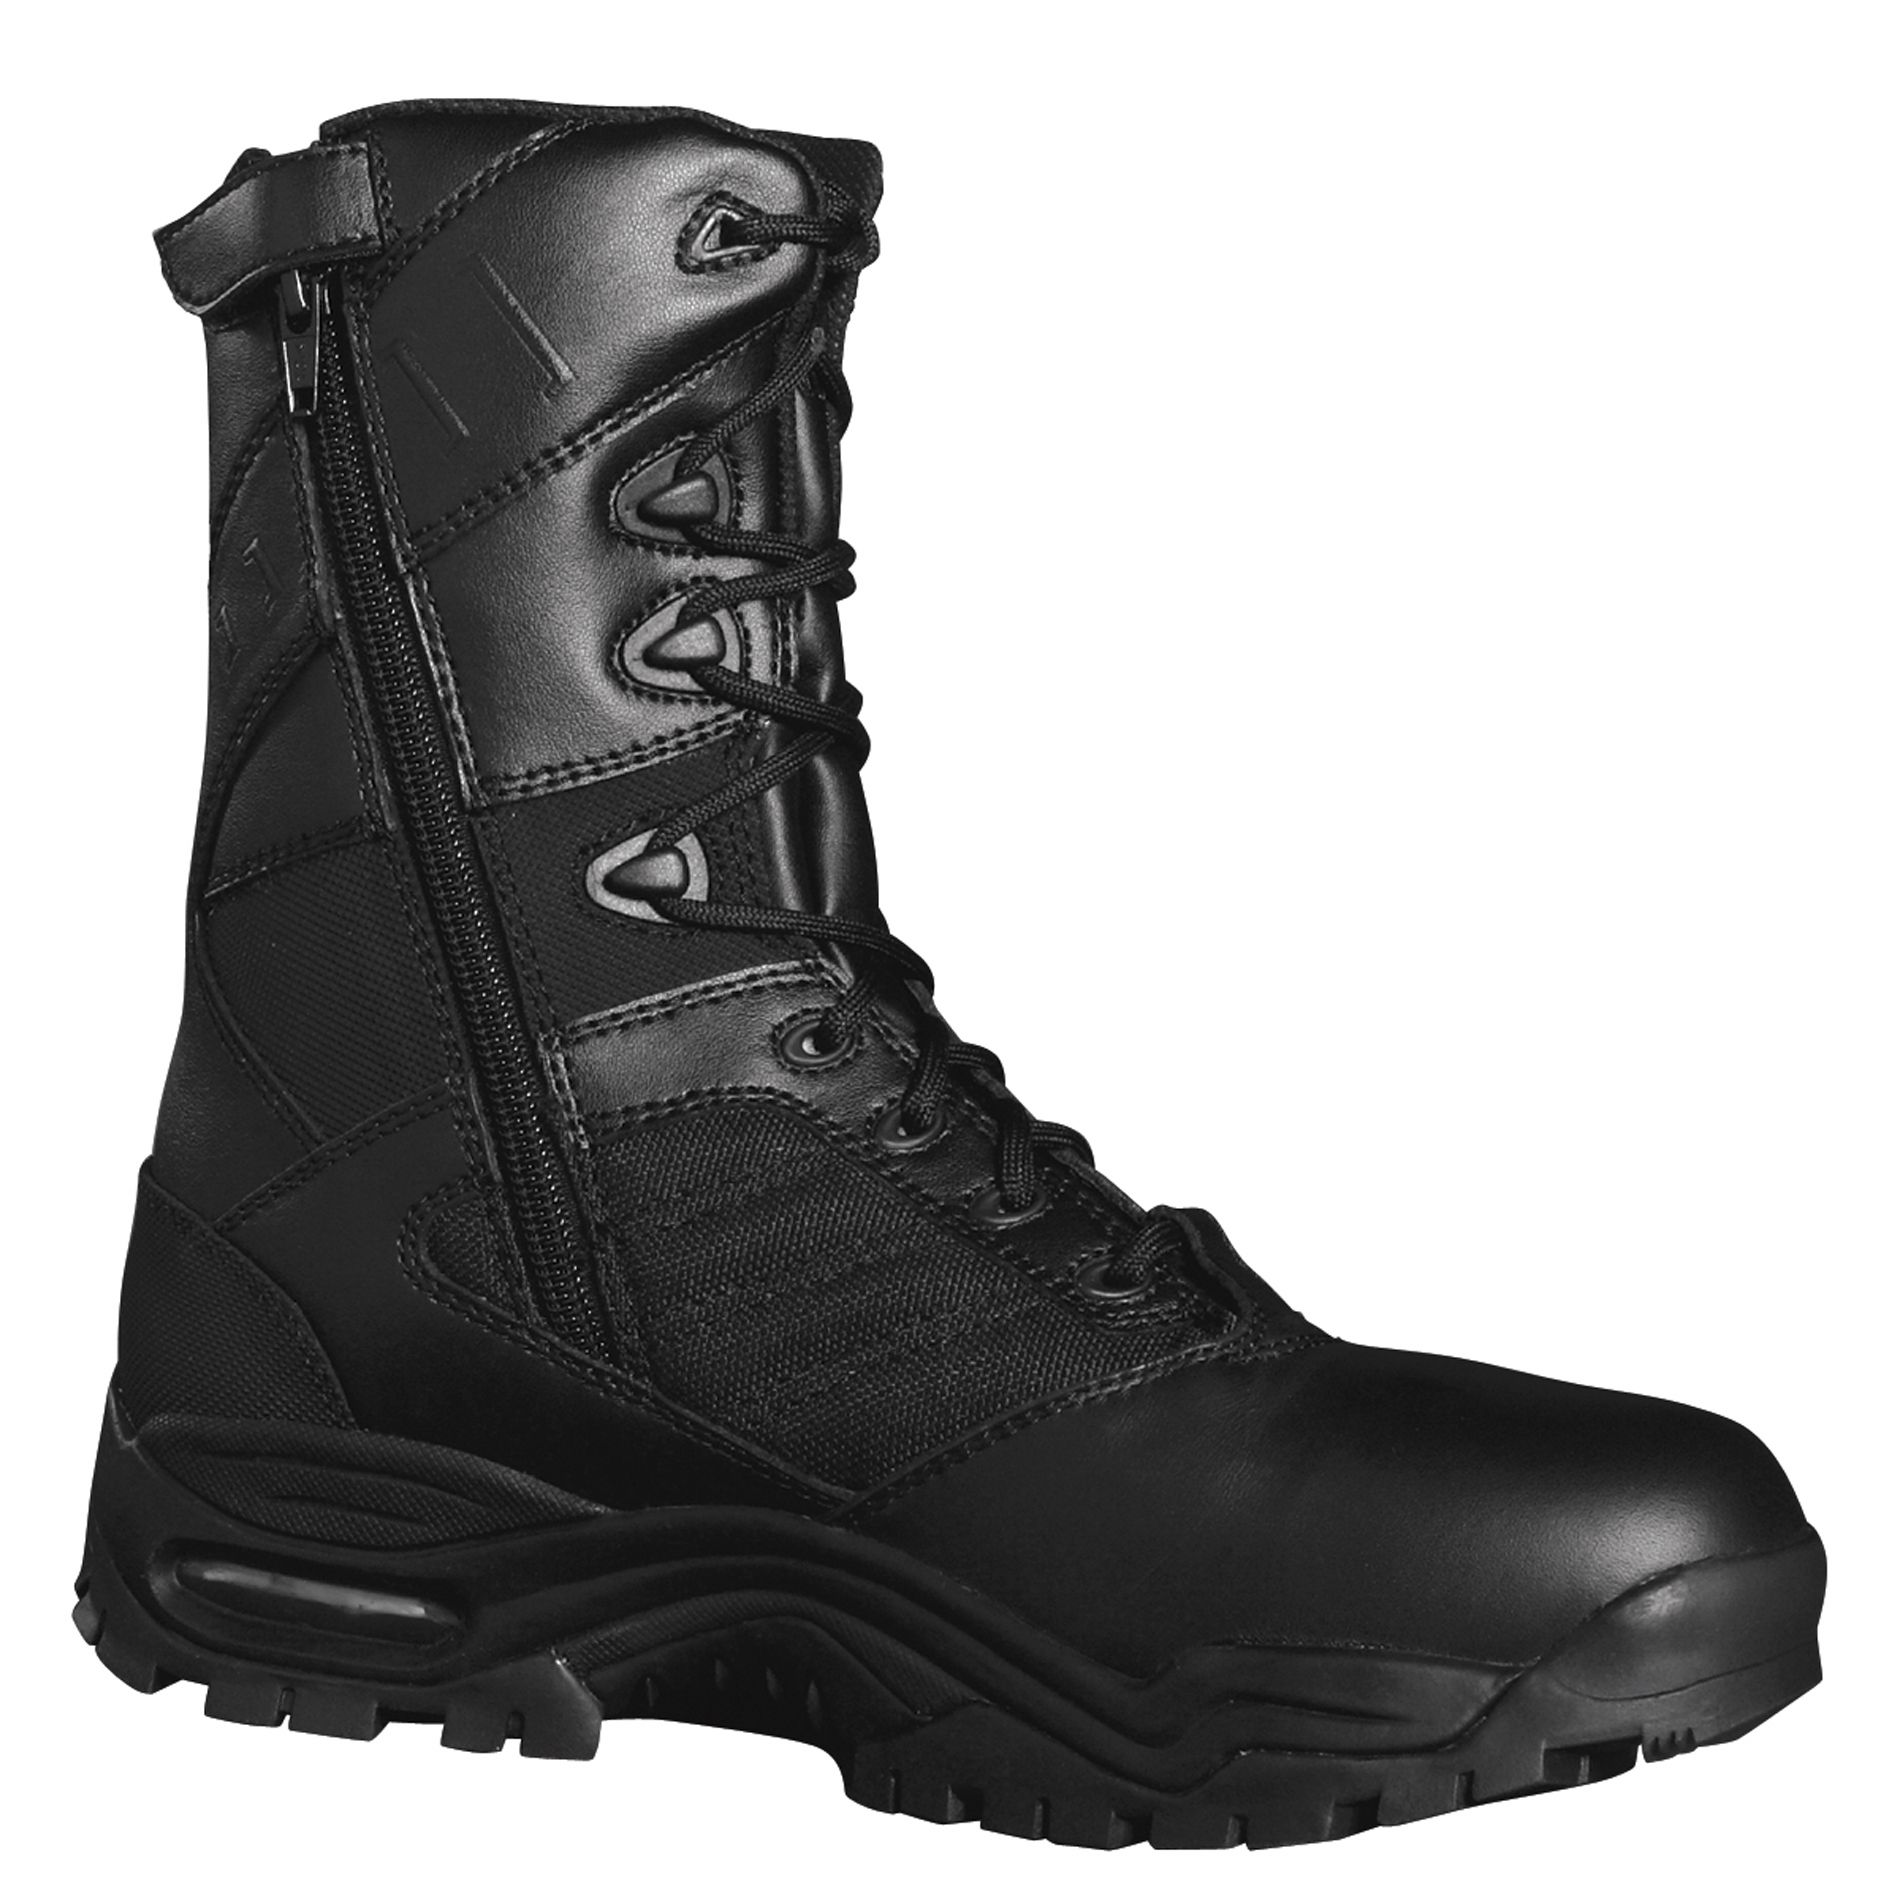 Ridge Footwear Men's 8" Ultimate Leather Waterproof Soft Toe Tactical Boot 09000 Wide Width Available - Black